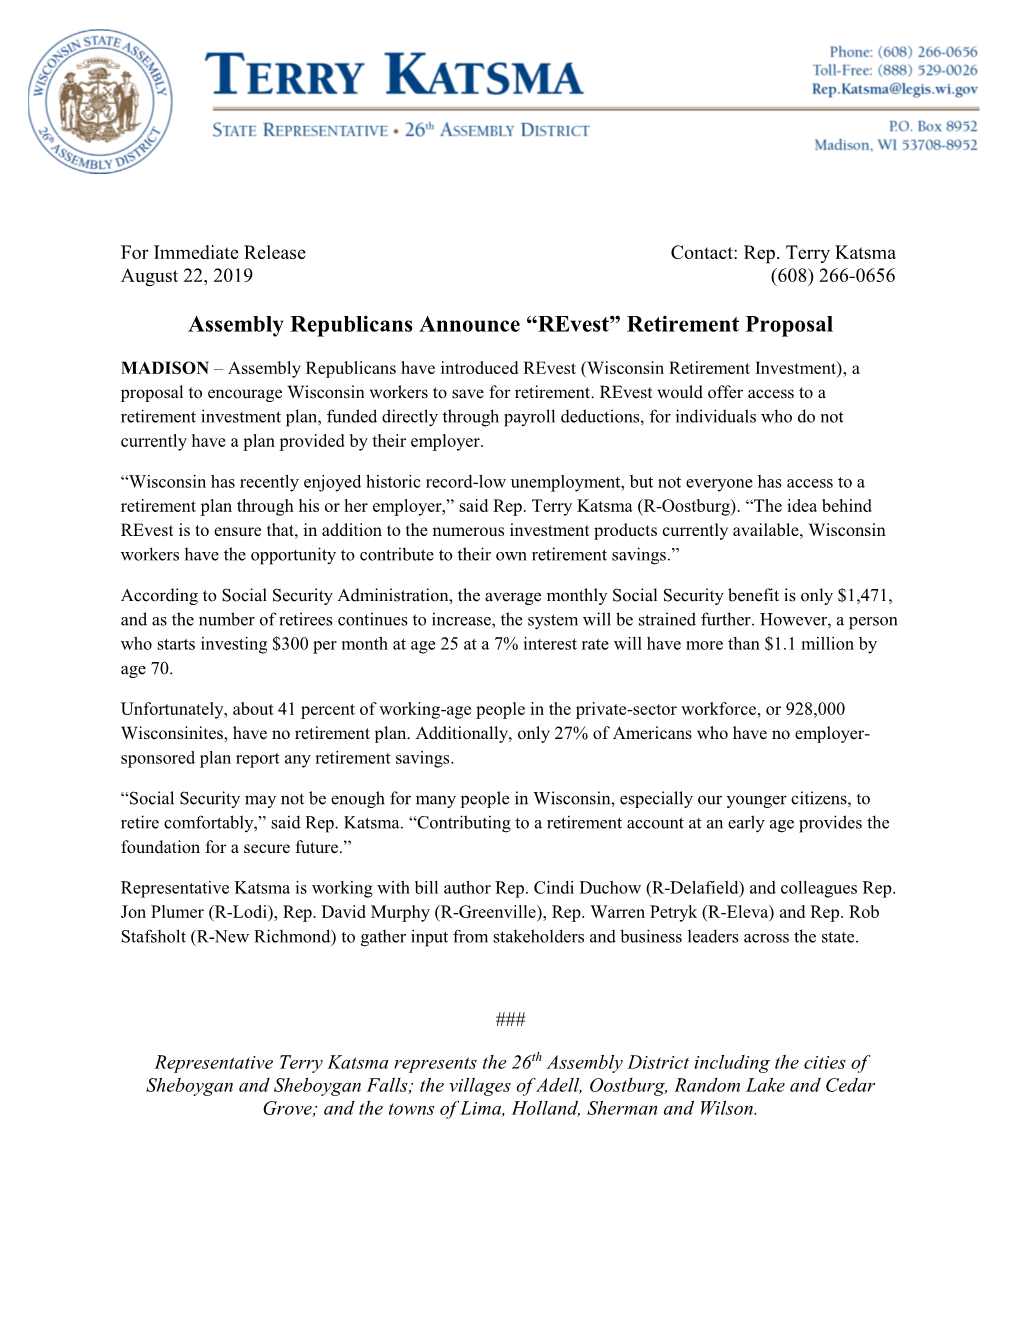 Assembly Republicans Announce “Revest” Retirement Proposal